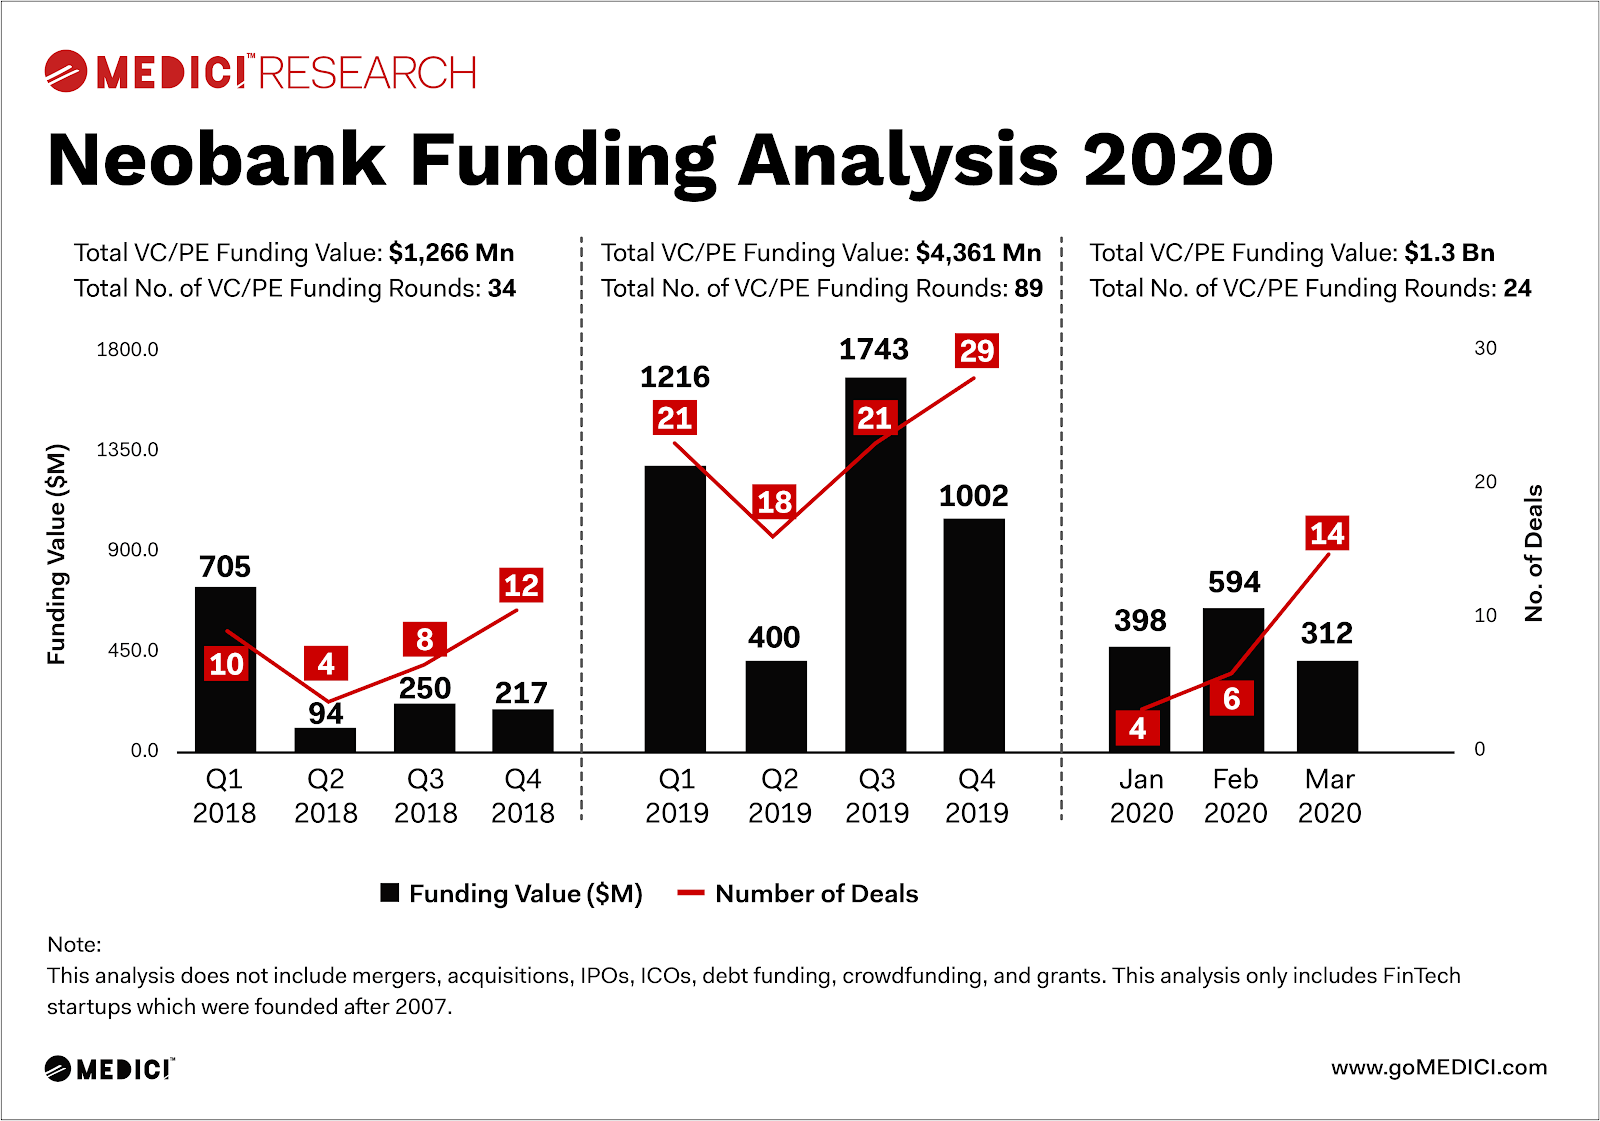 neobank-funding-analysis-gomedici-2020-ascendixtech